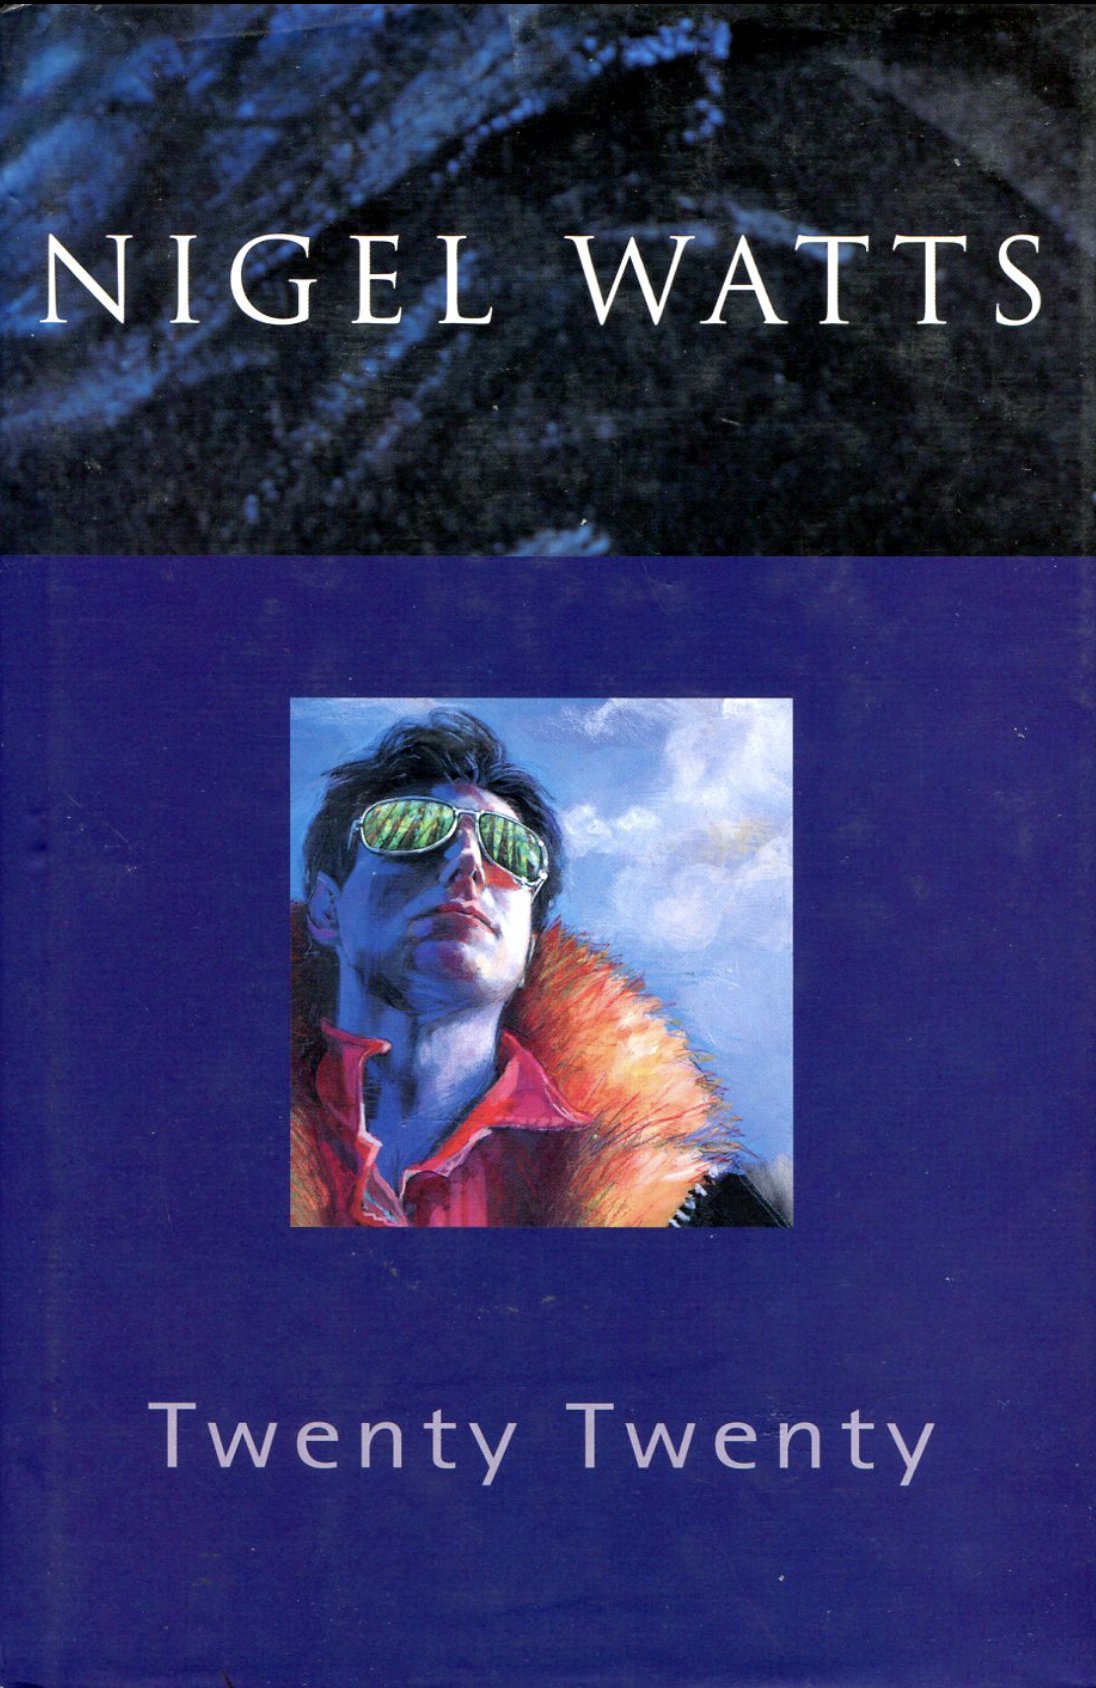 Nigel Watts Cover.jpg